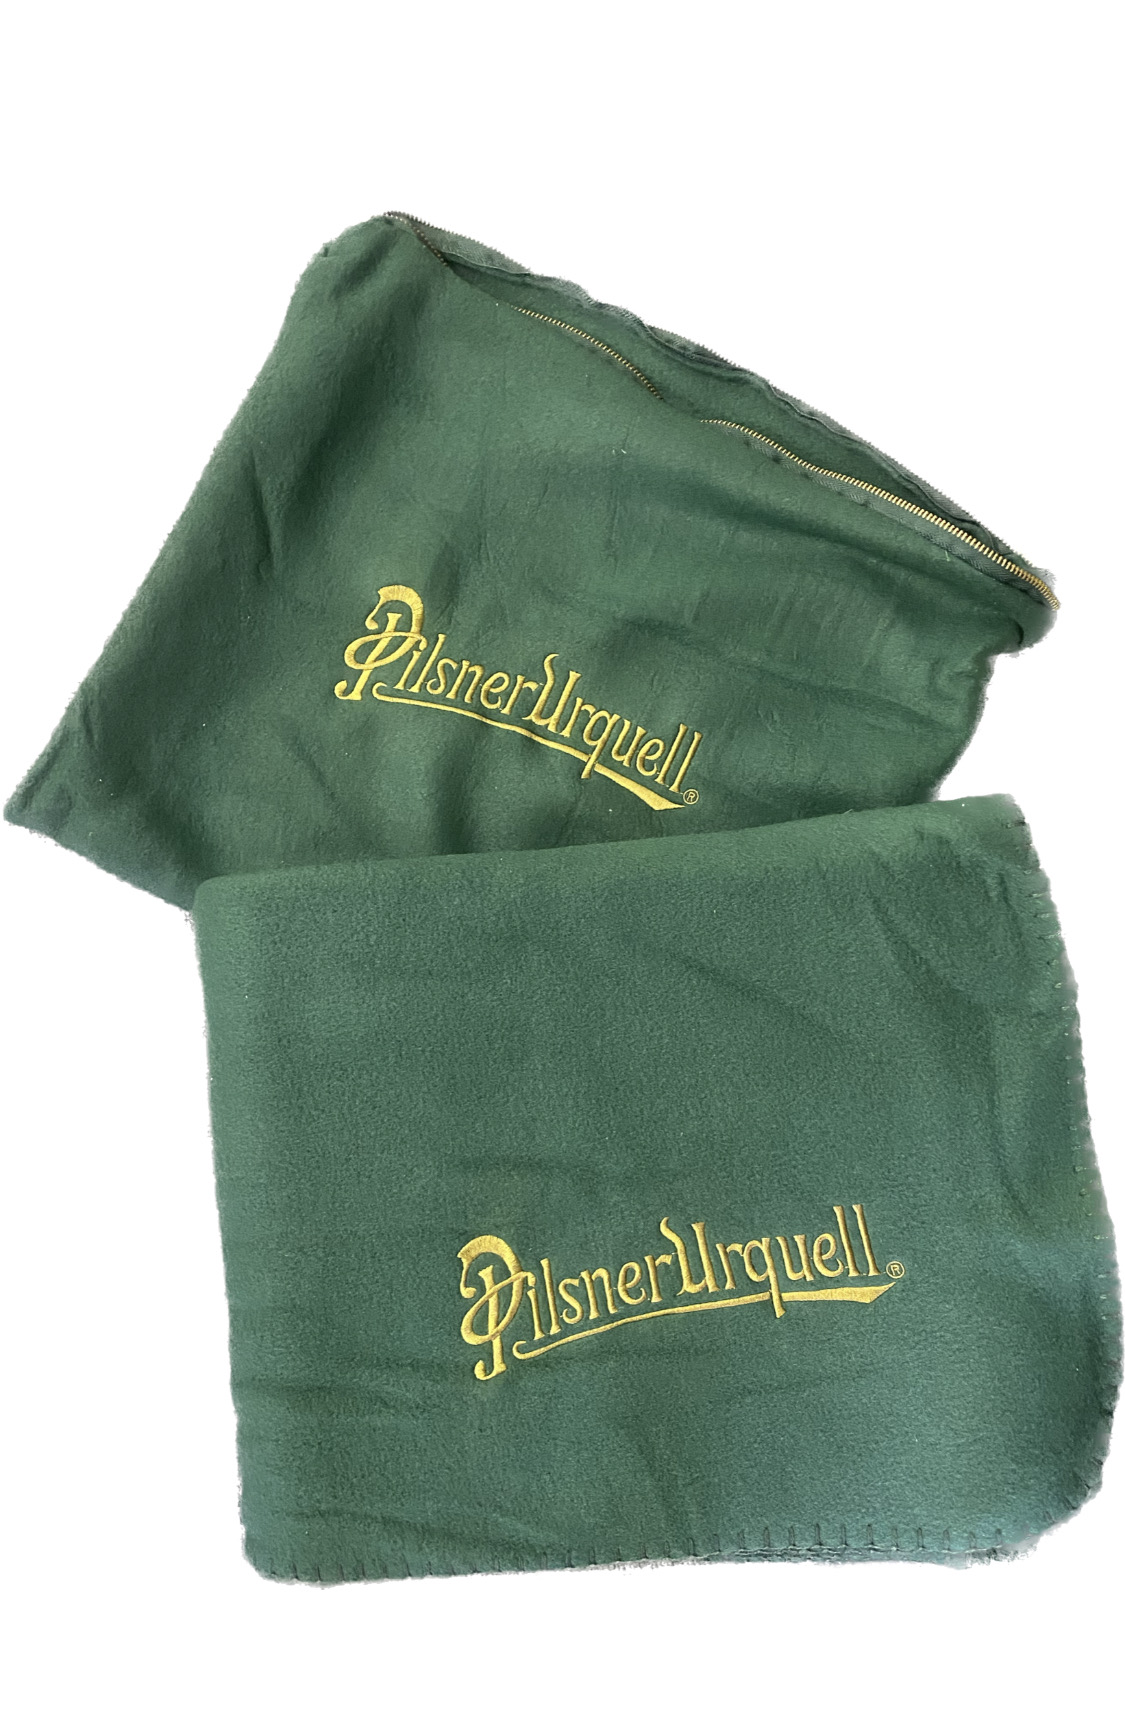 Green blanket Pilsner Urquell